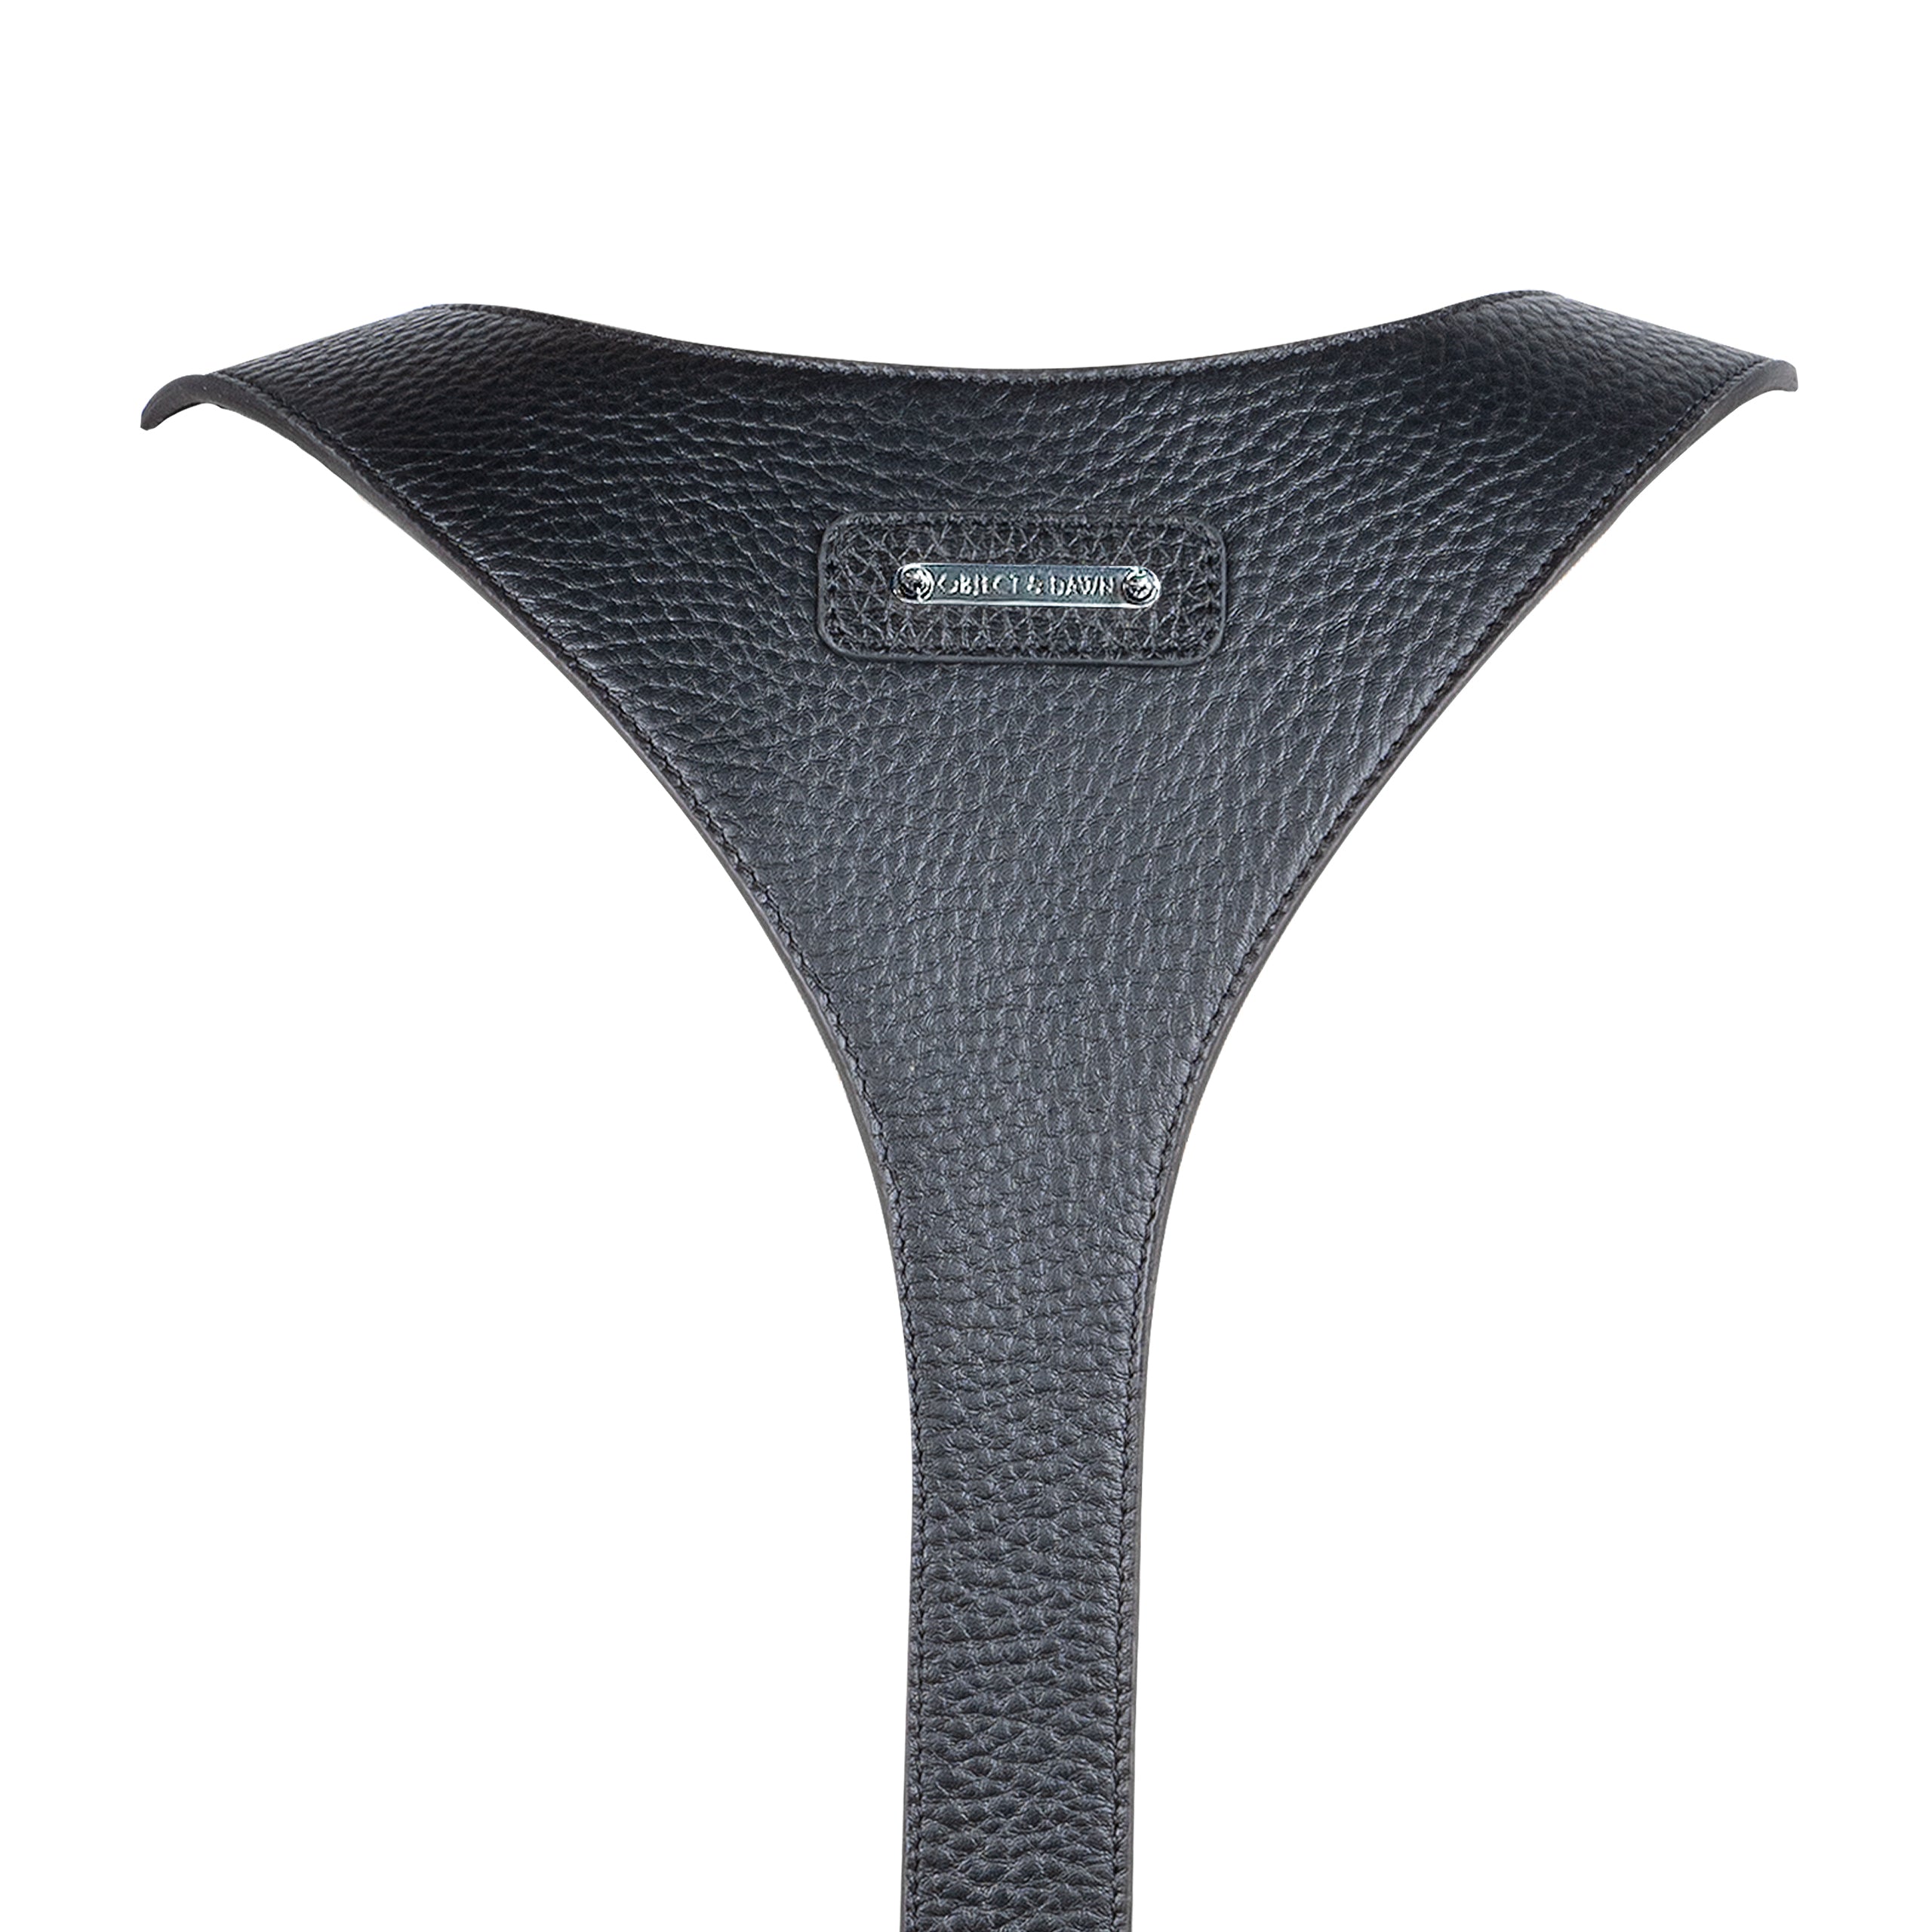 Zheng Modular Leather Harness / Belt- Removable Straps